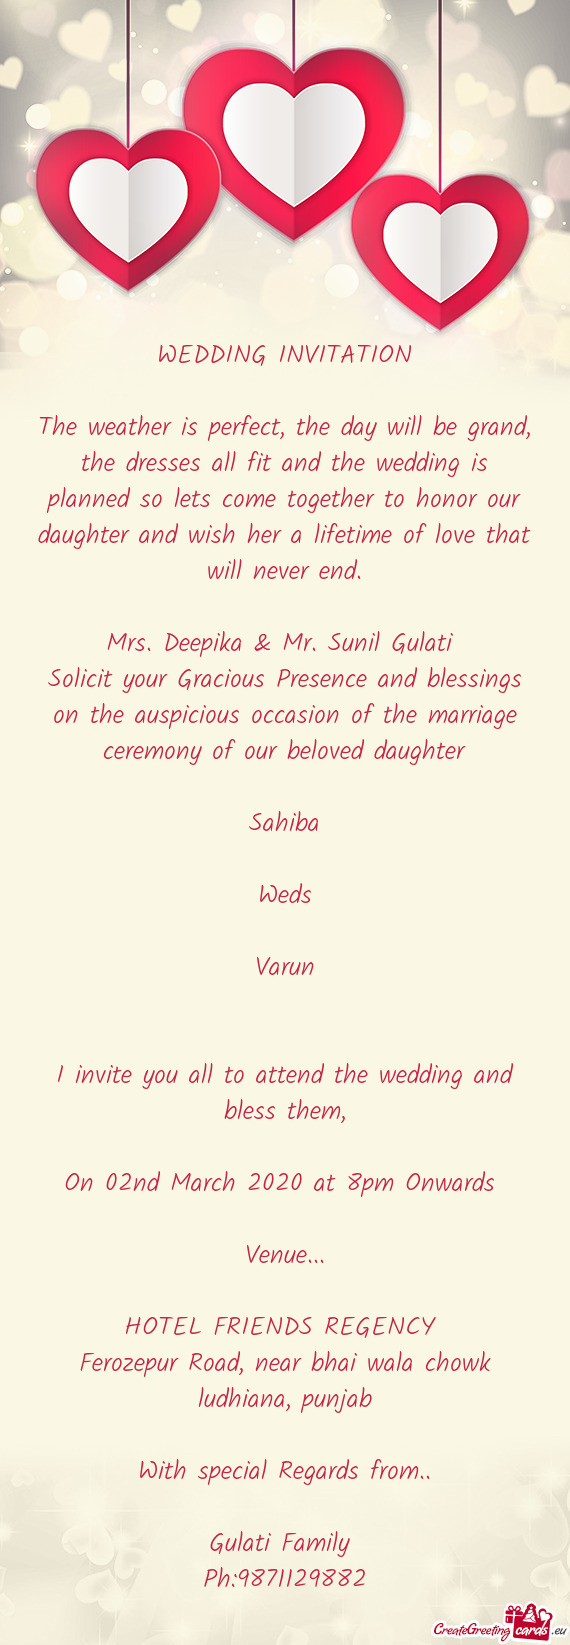 Mrs. Deepika & Mr. Sunil Gulati